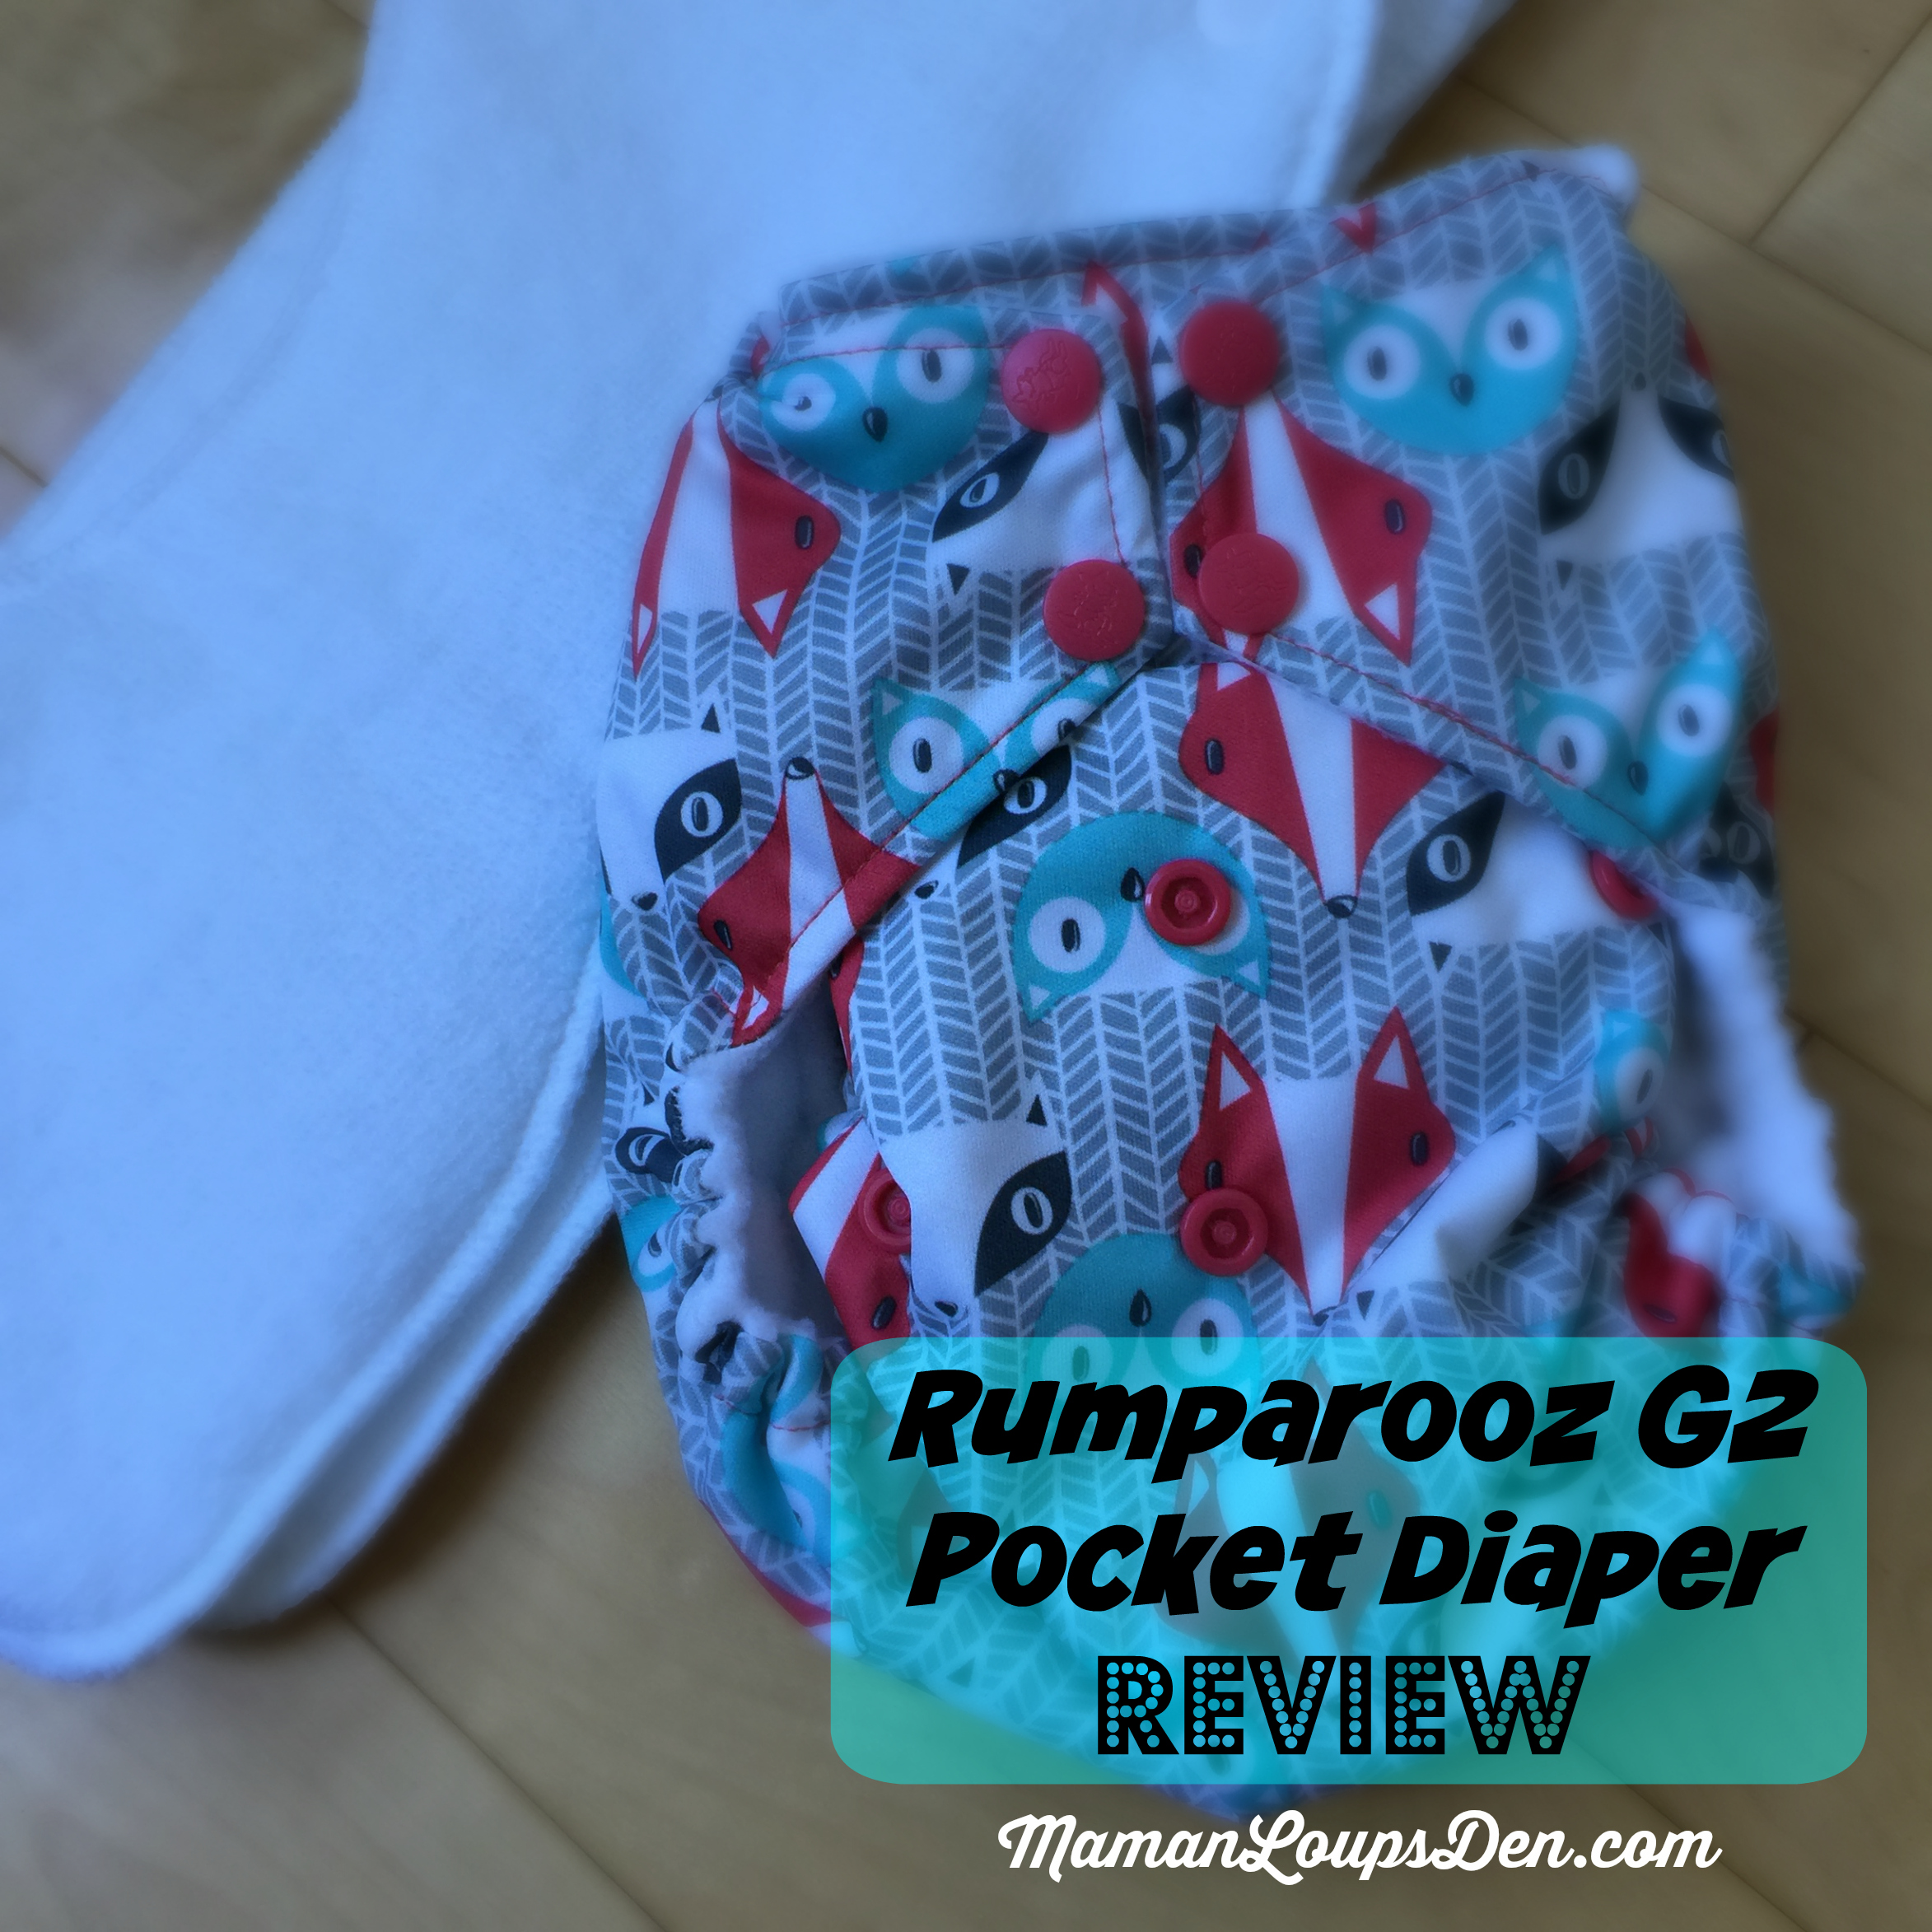 Rumparooz G2 One-Size Pocket Diaper Review